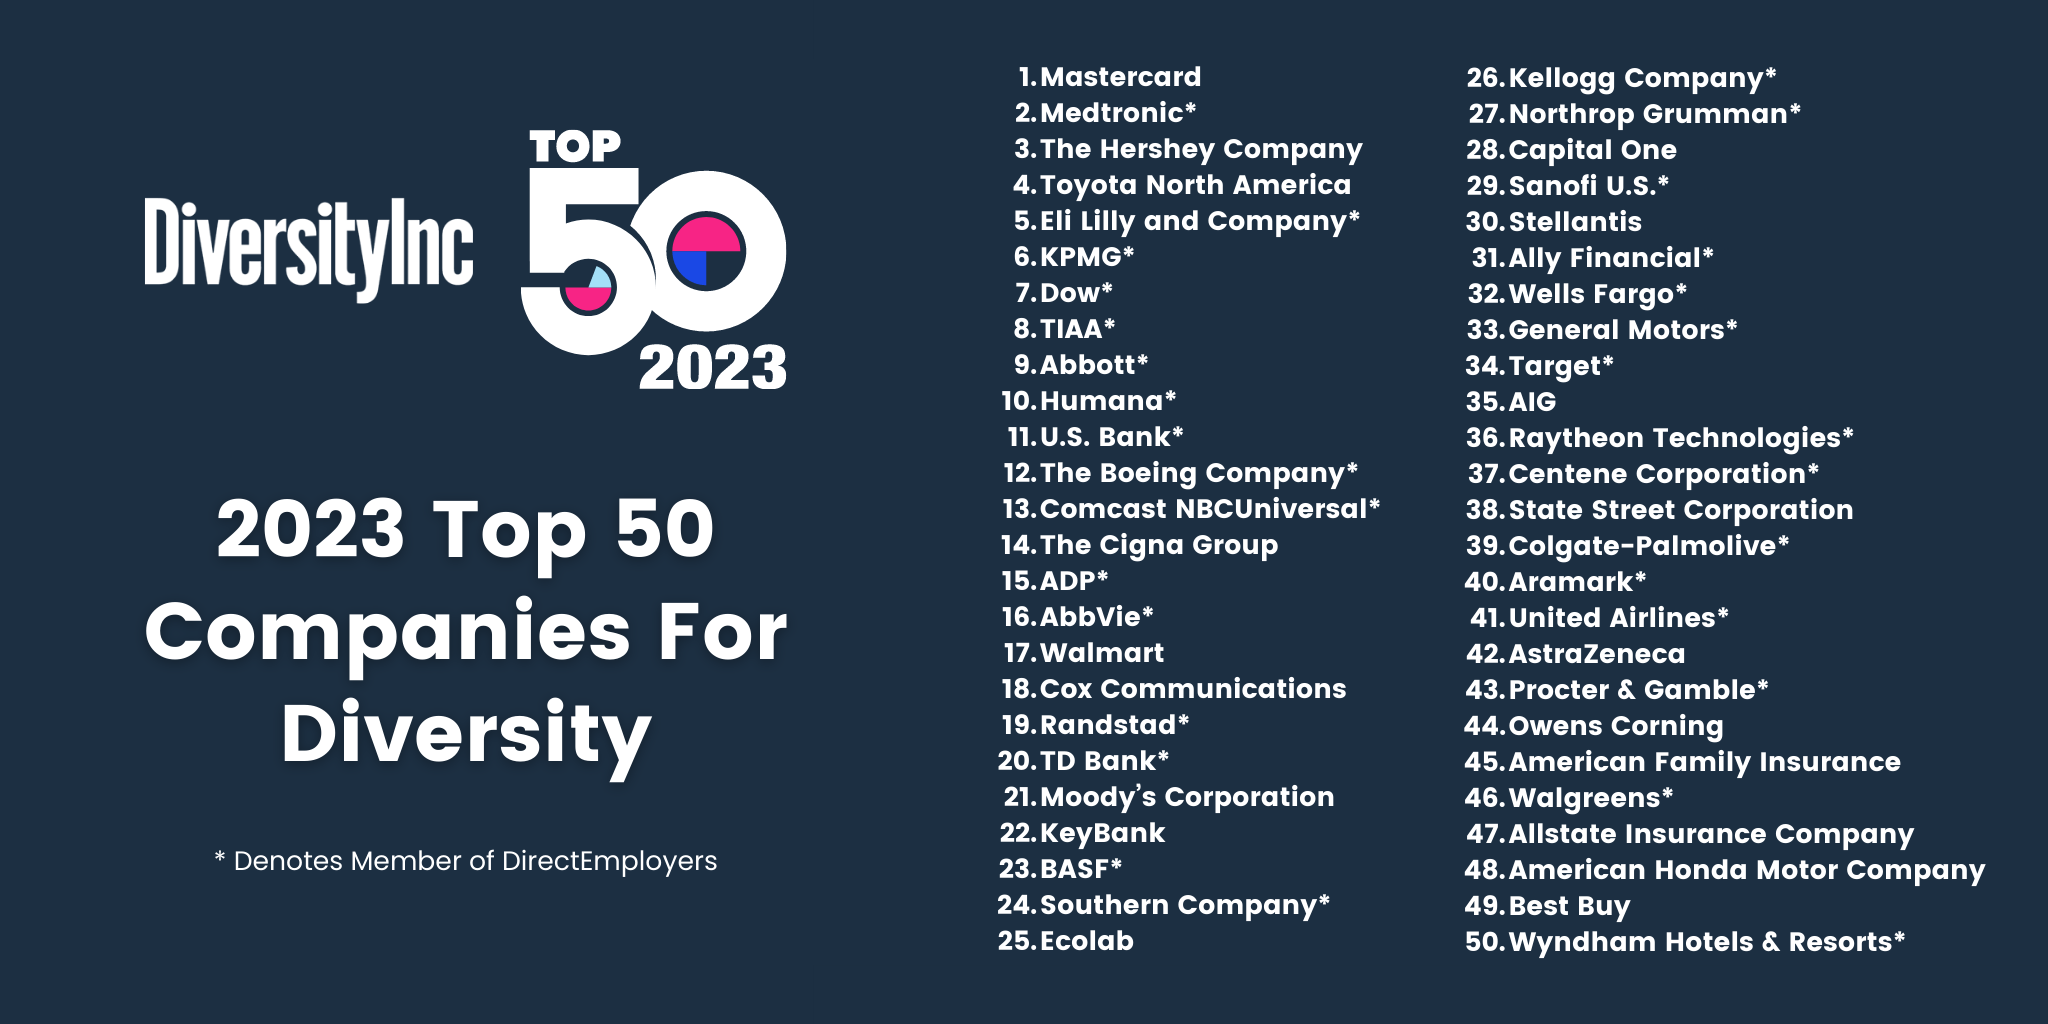 DiversityInc 2023 Top 50 Companies for Diversity List